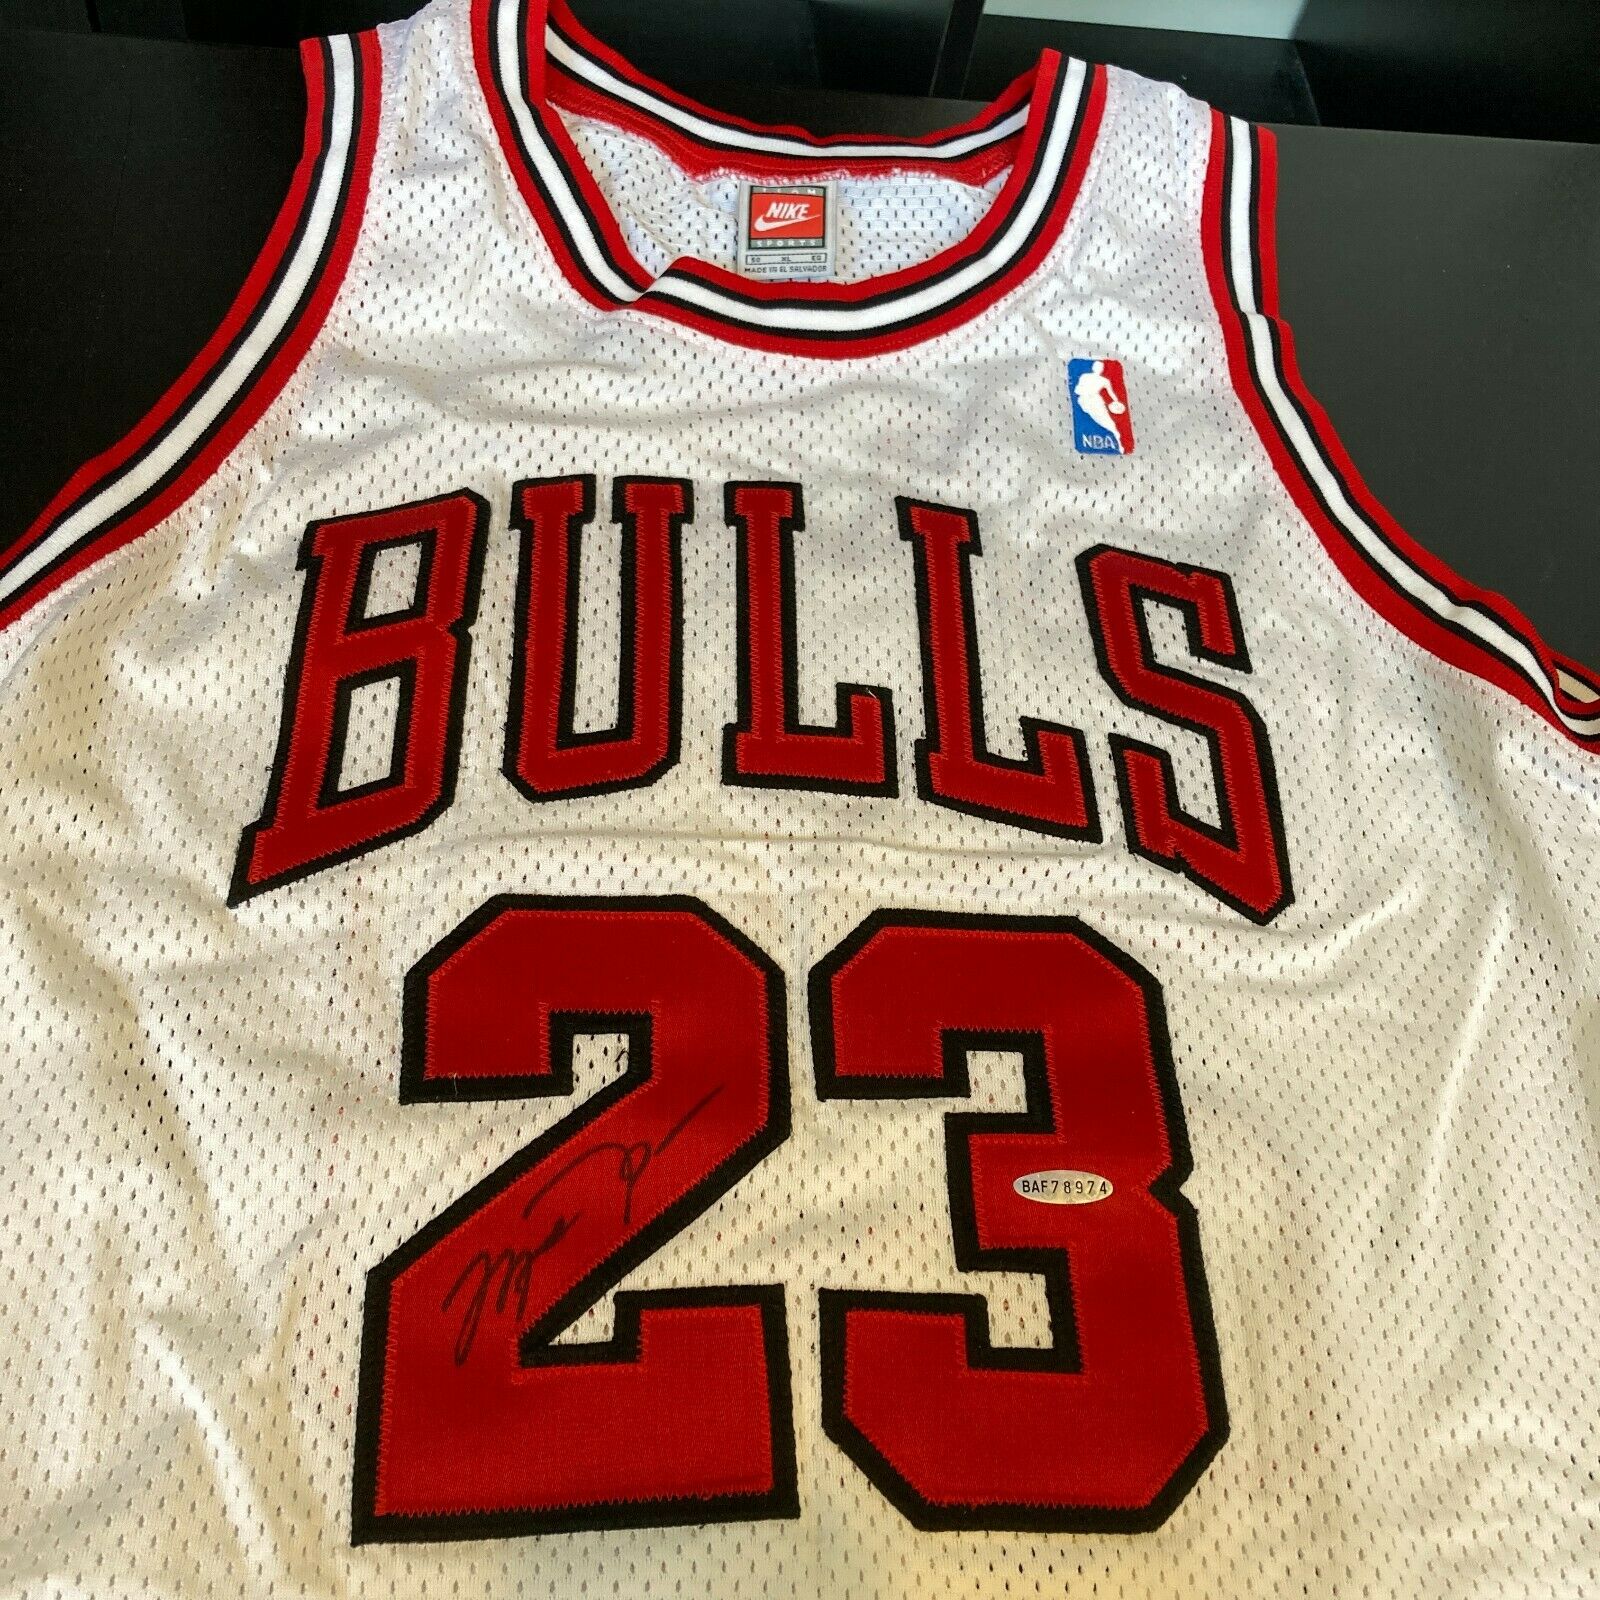 1998-99 Michael Jordan Signed Chicago Bulls Jersey - UDA, Lot #80925